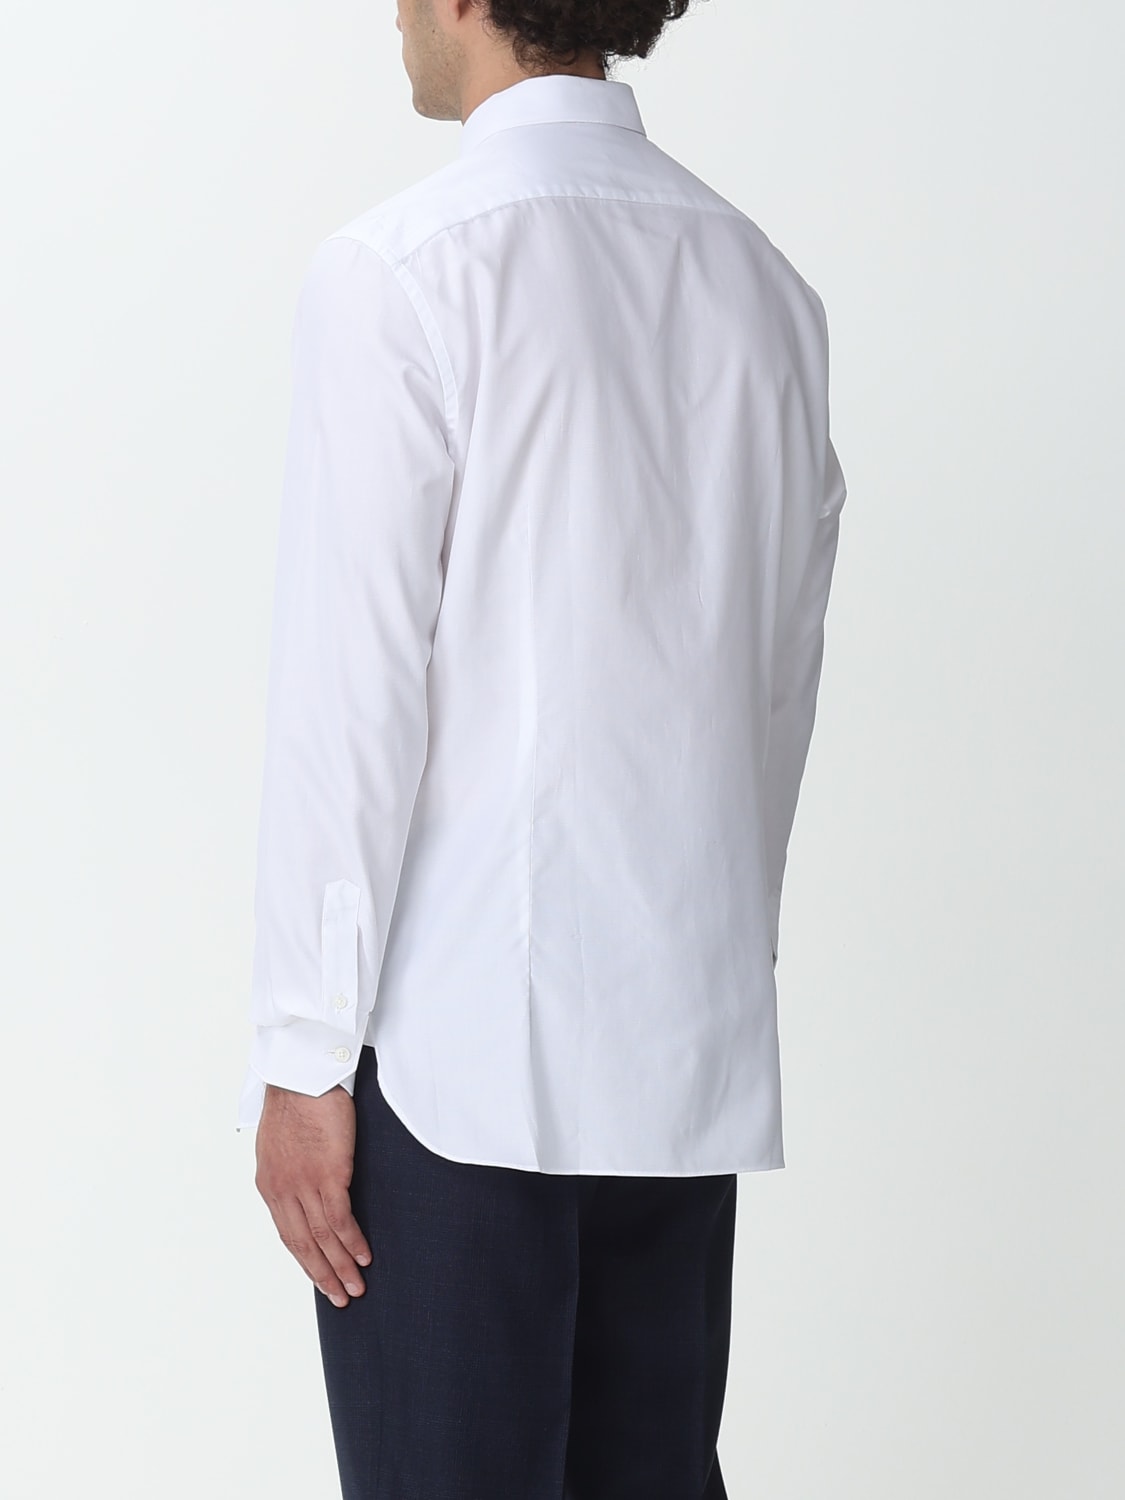 ZEGNA: shirt for man - White | Zegna shirt 9YS0CA601032A6 online at ...